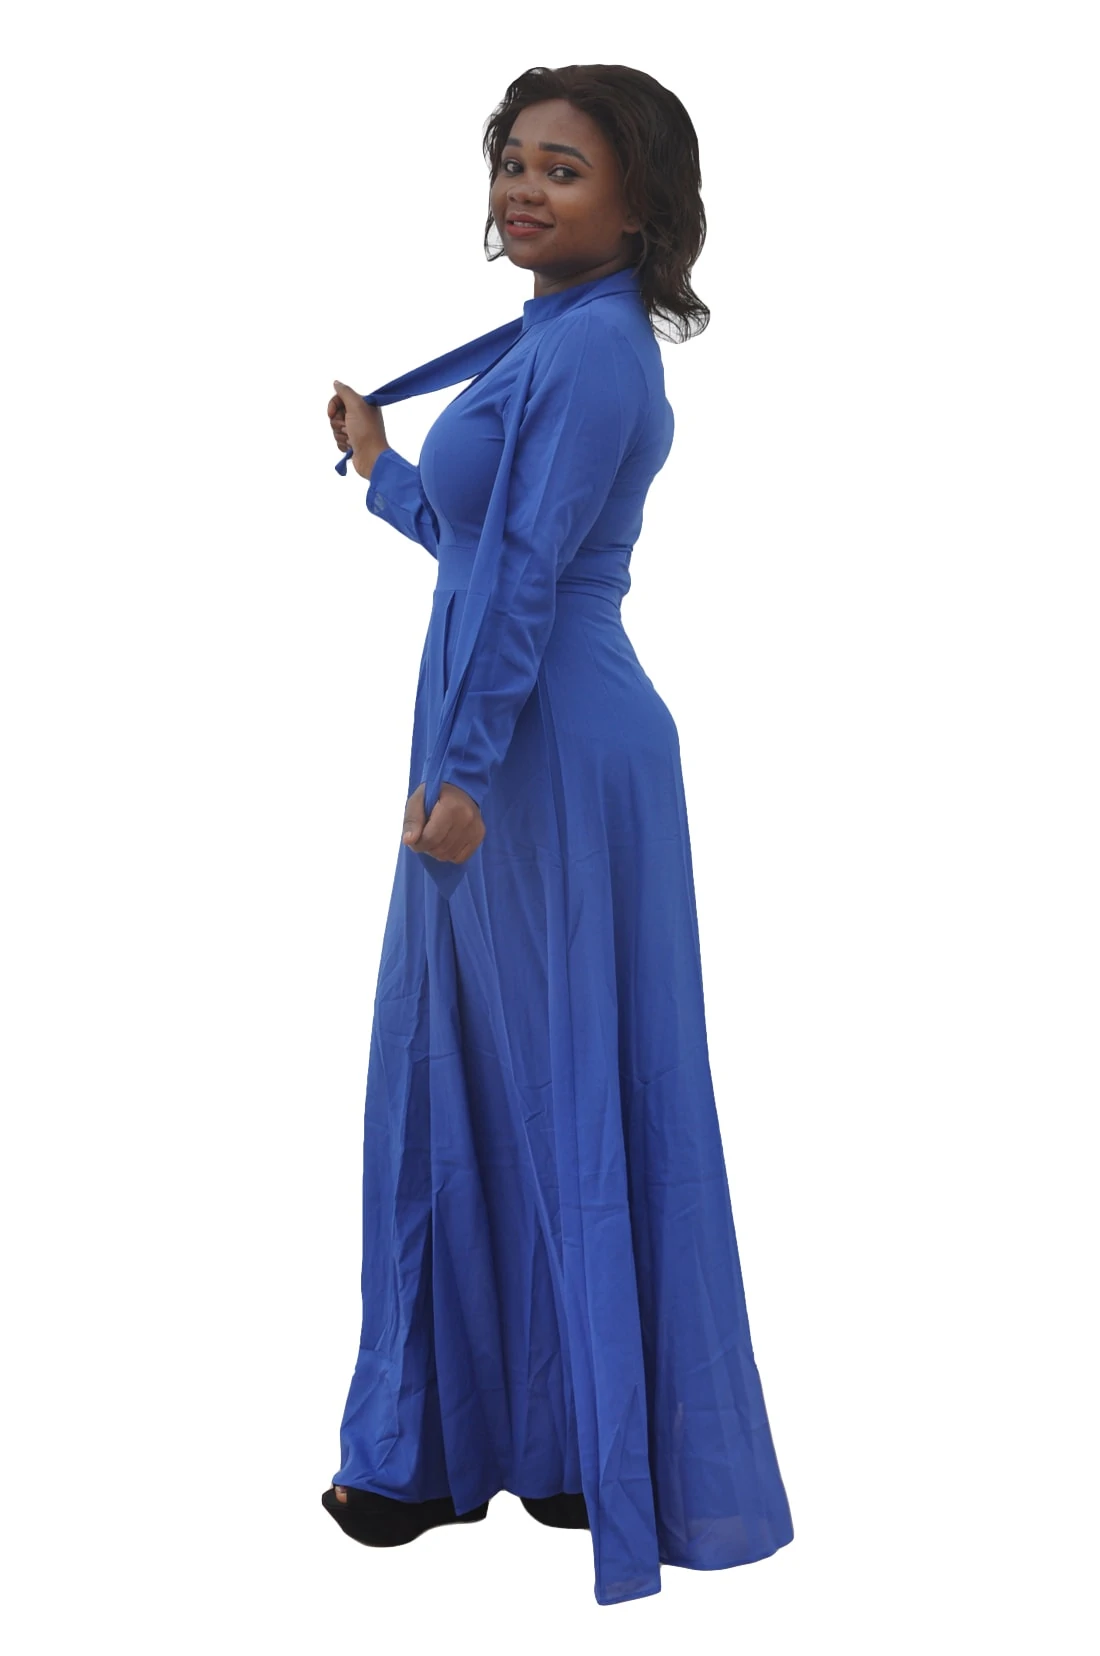 M0293 blue4 Long Sleeve Dresses maureens.com boutique